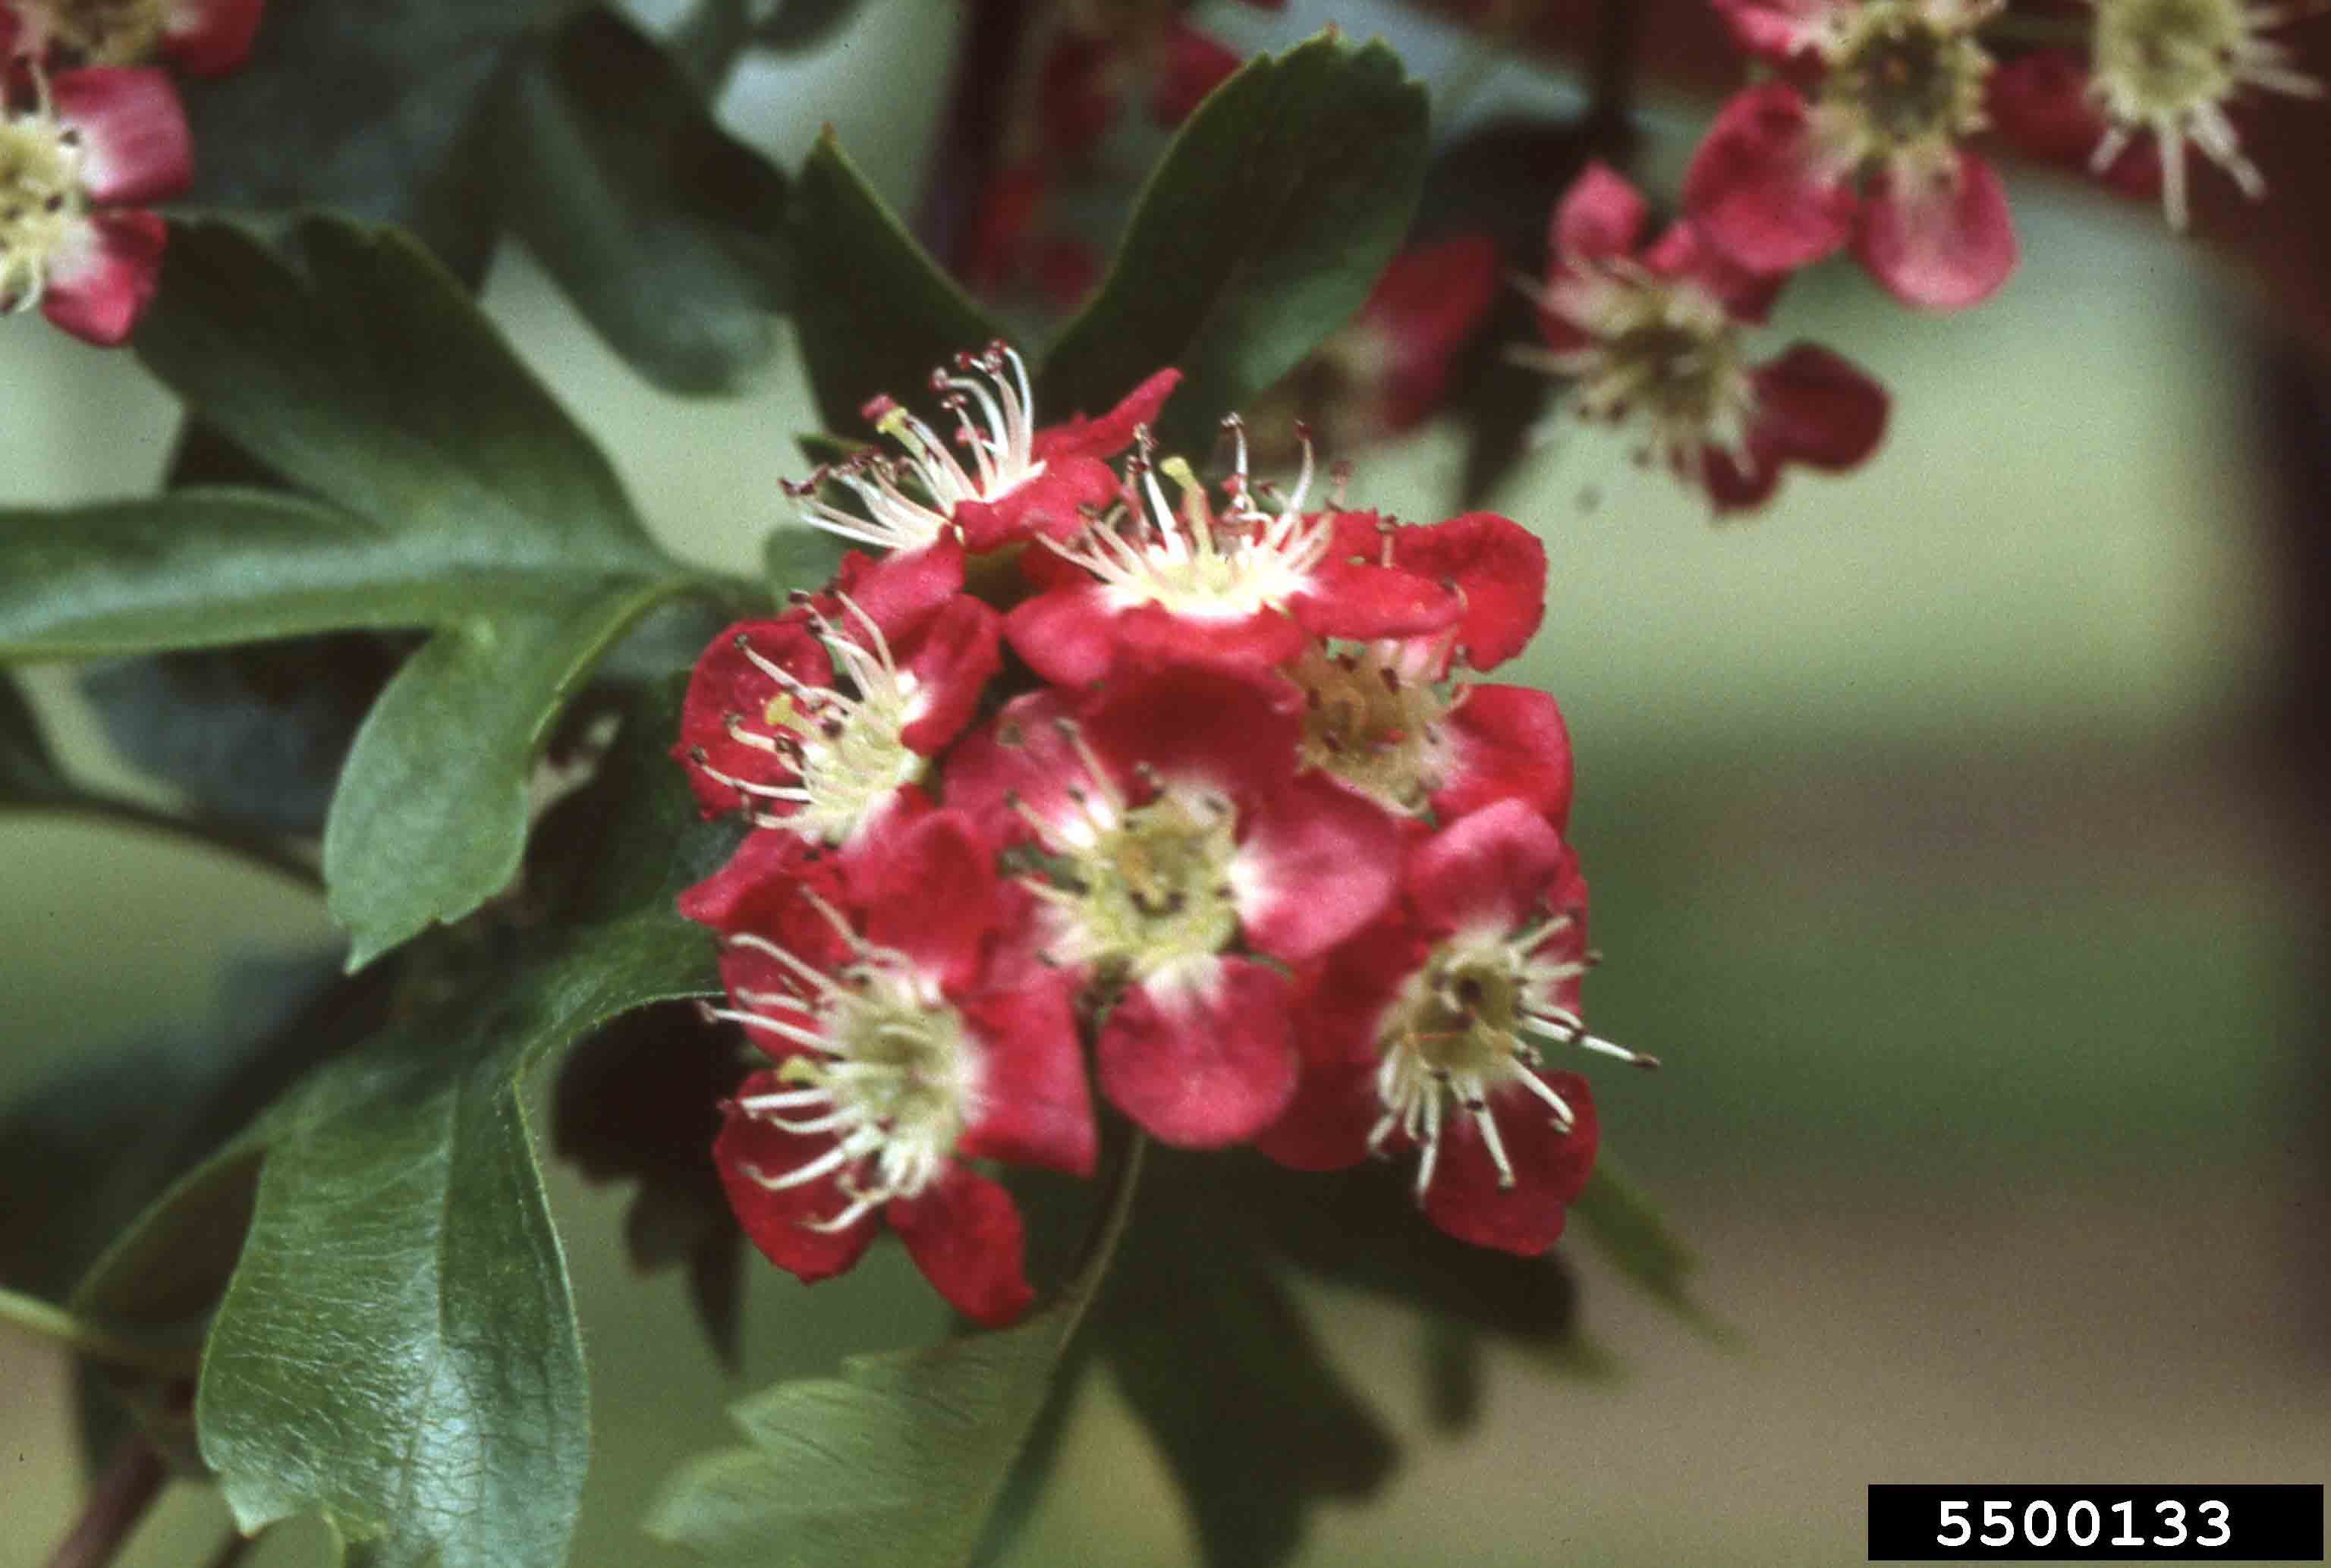 Smooth hawthorn flower, red-flowering cultivar